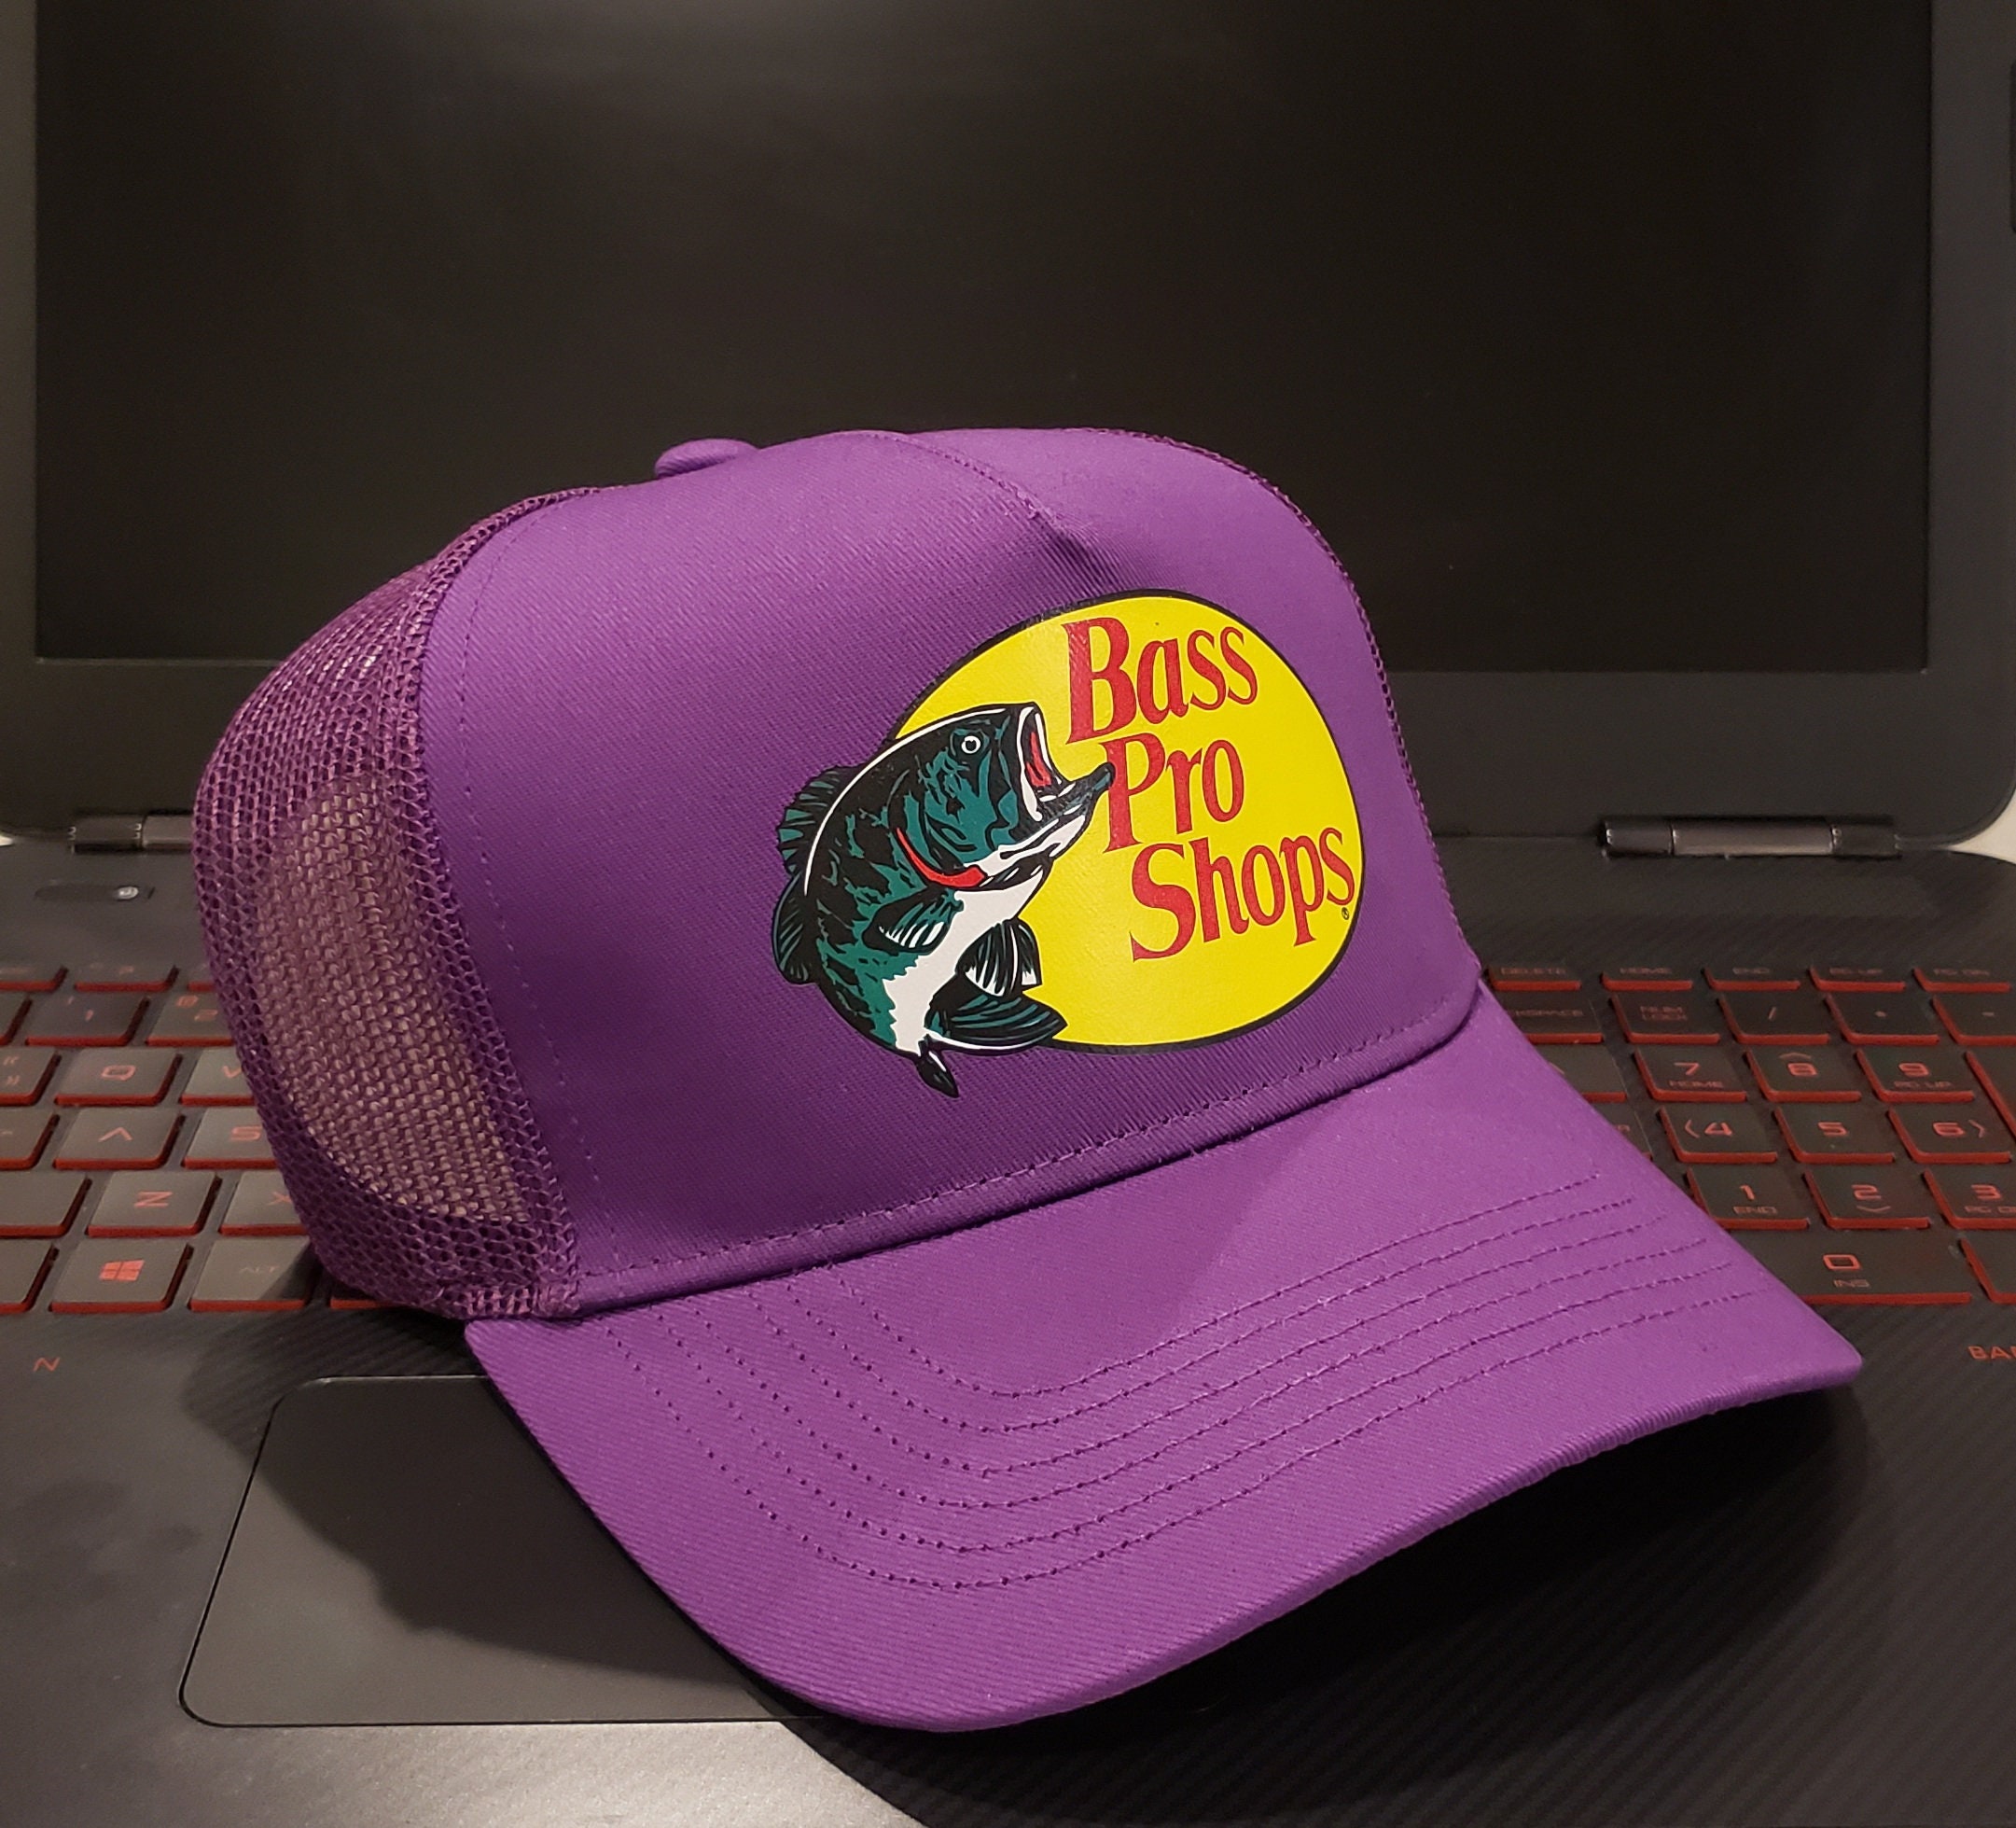 Bass Pro Shops Hat Mesh Adjustable Snapback Trucker Fishing Outdoor Cap, Adult-Size, Purple